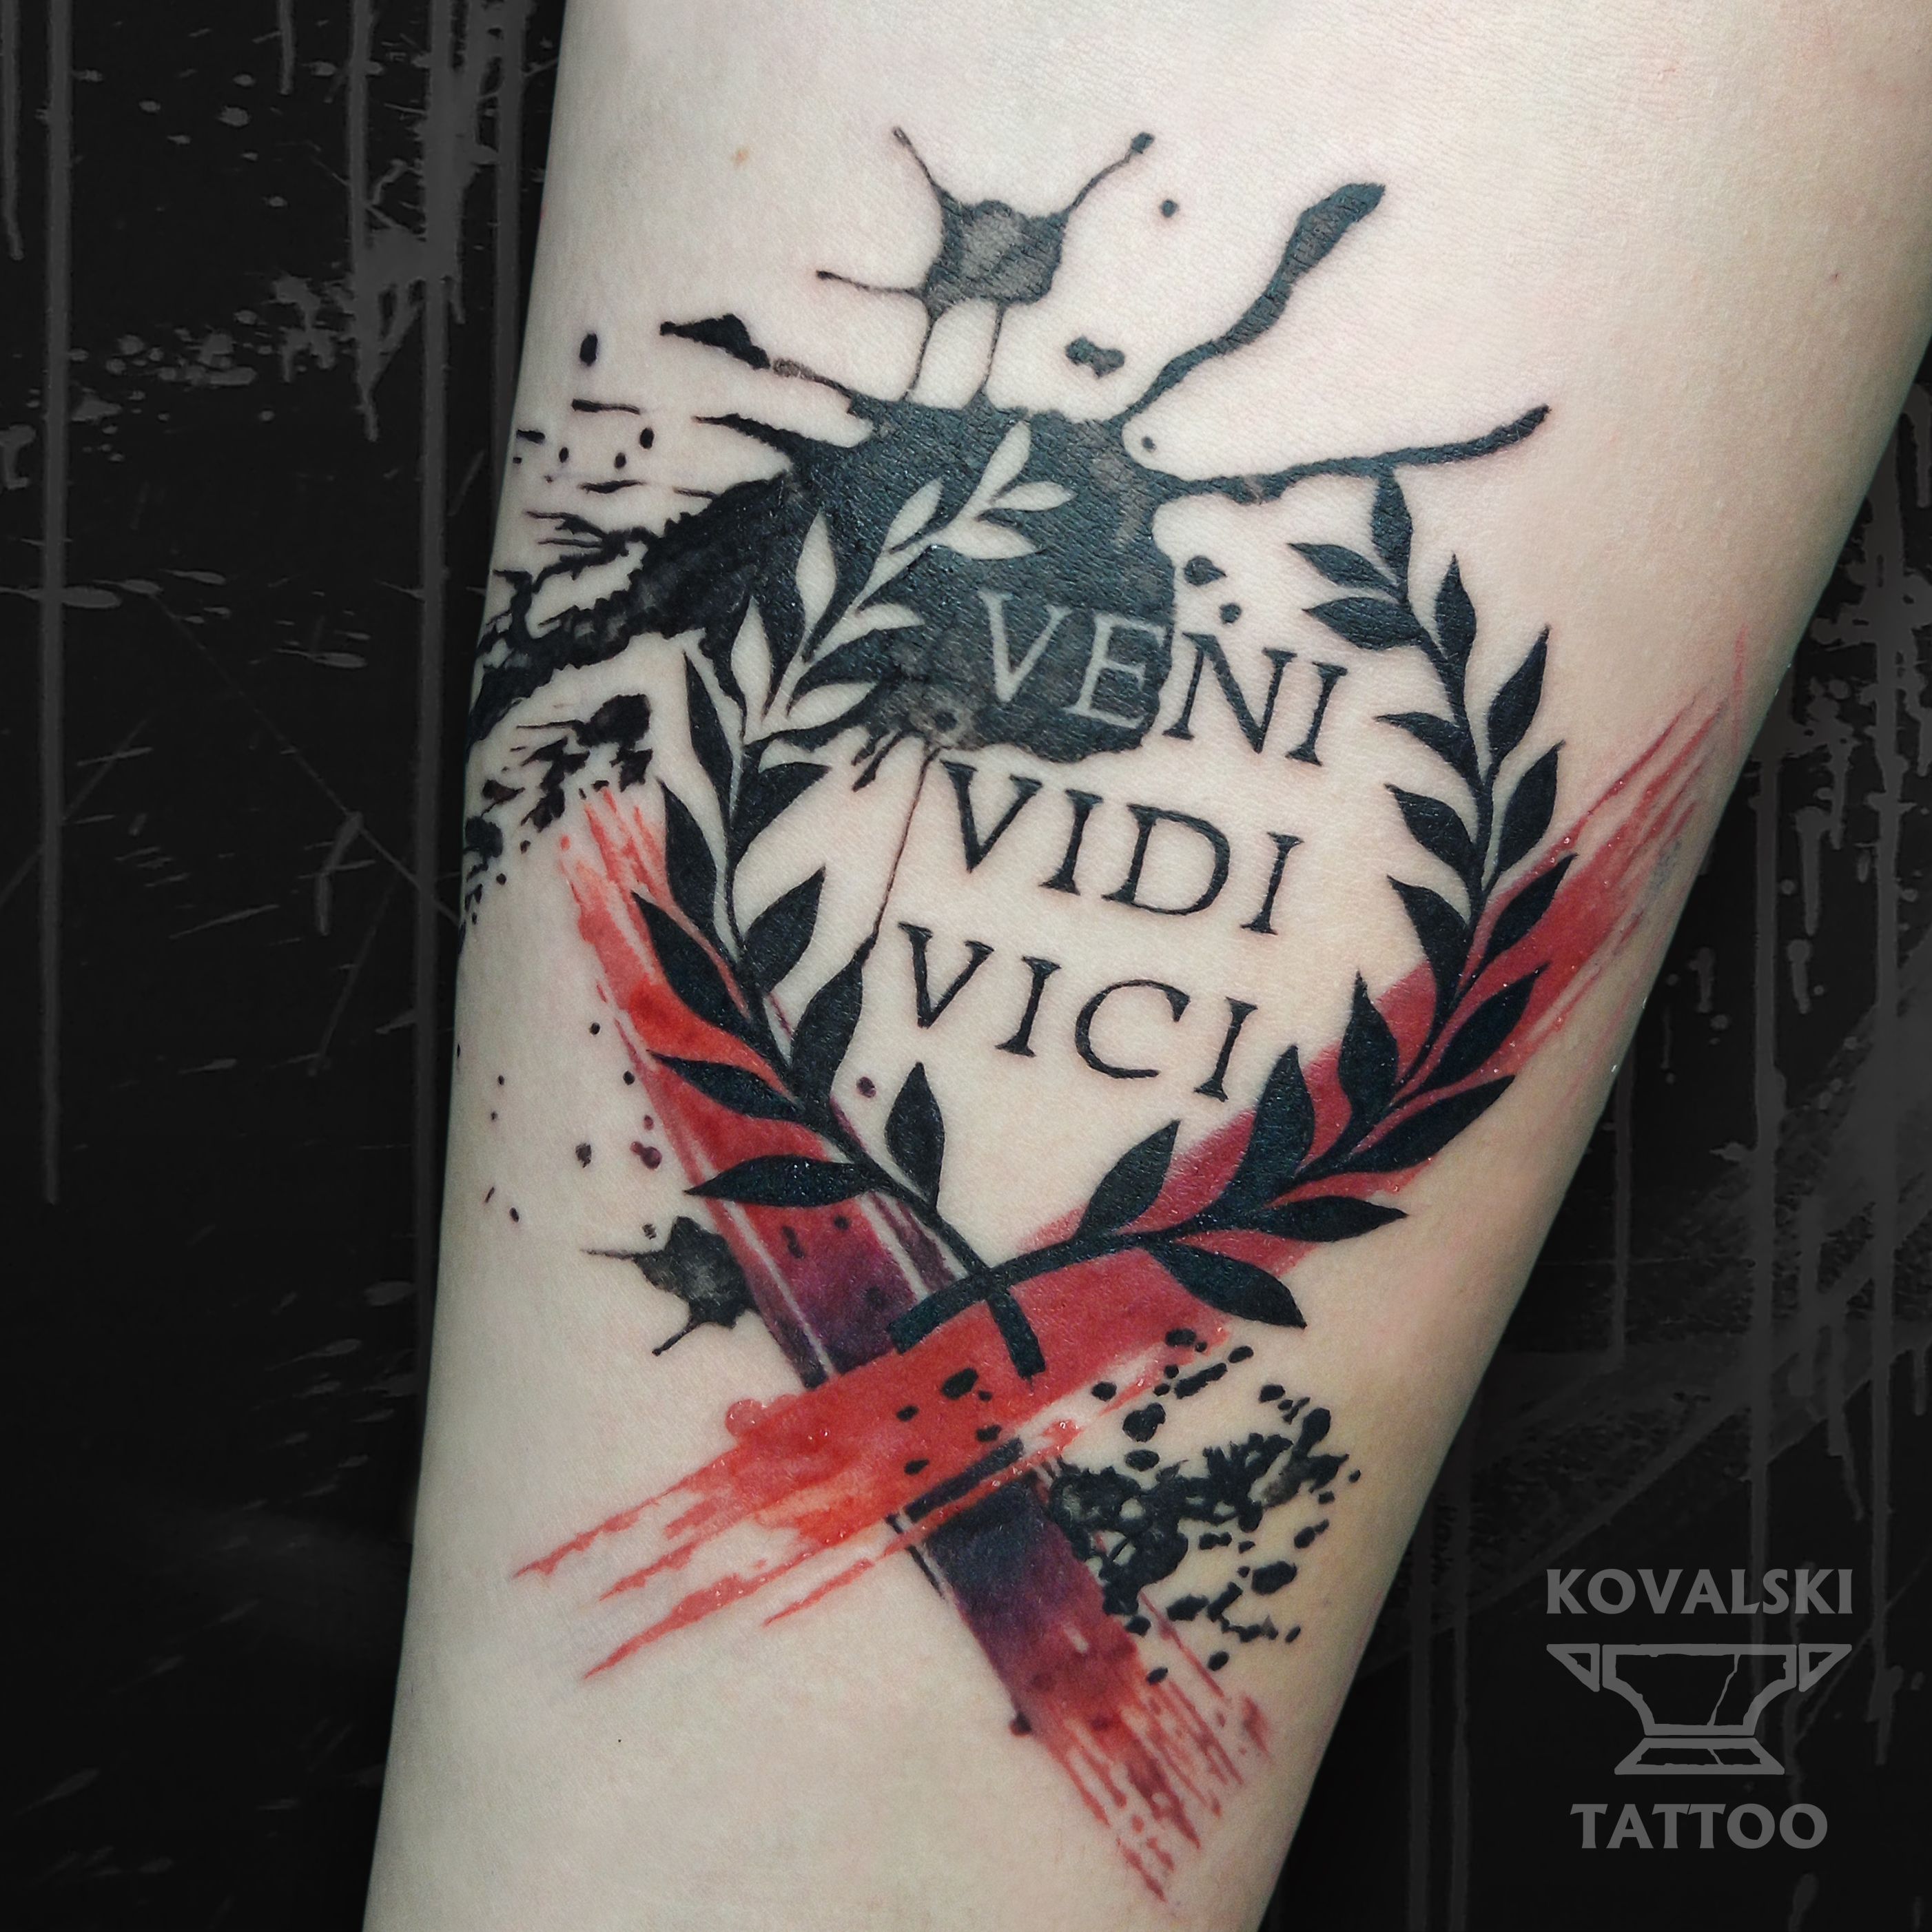 Can someone make a high quality vector of Zyzzs Veni Vidi Vici tattoo   rPhotoshopRequest